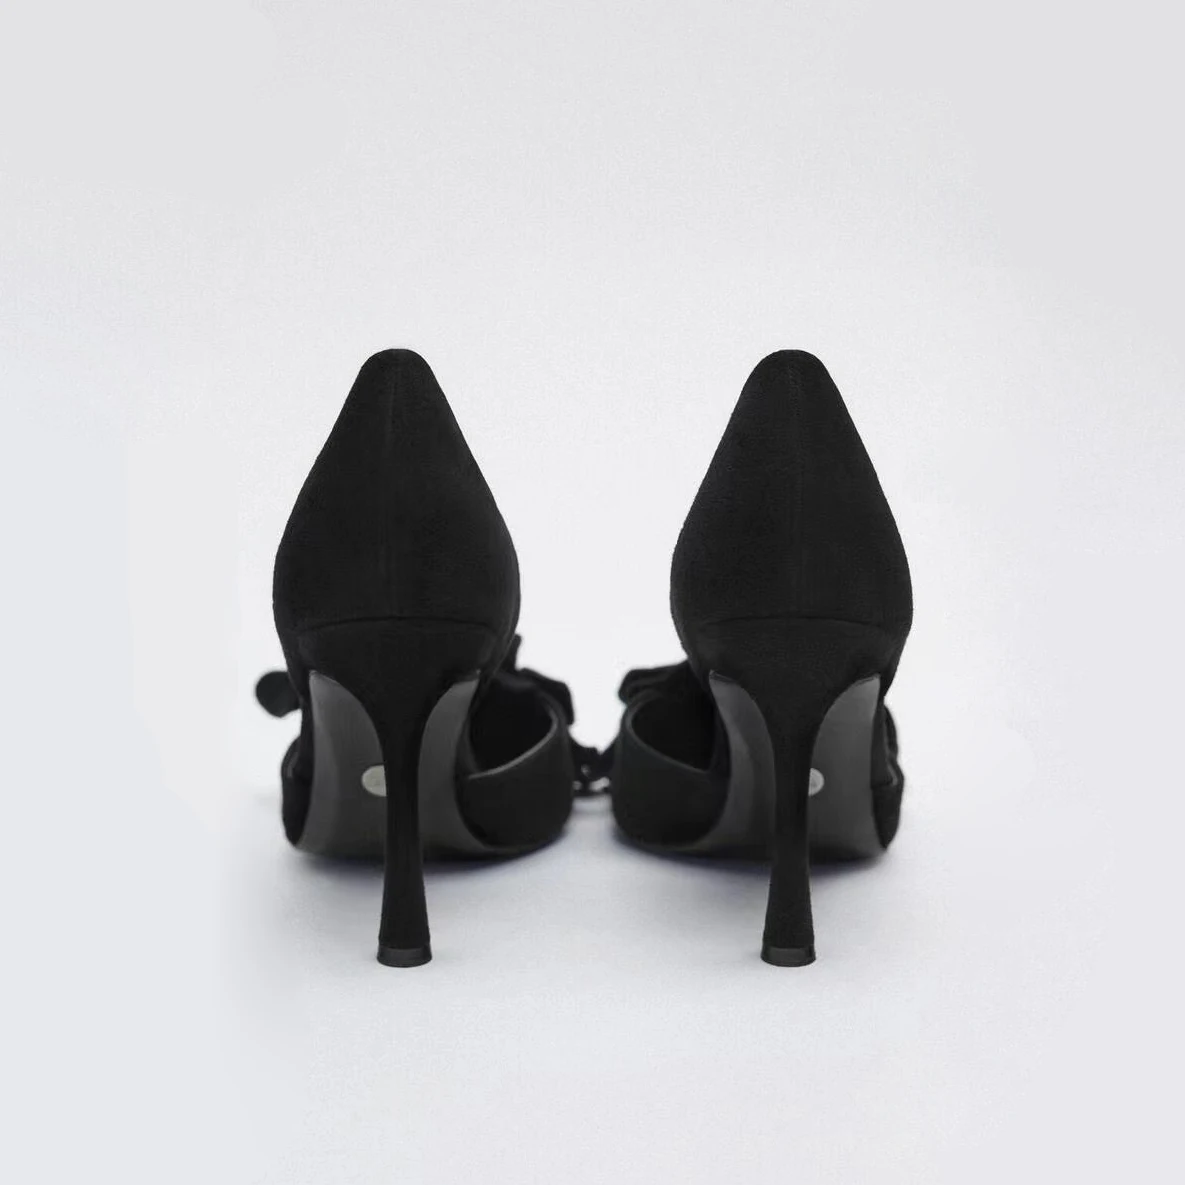 New Design Dress Women's High Heel Shoes Pointed Soft Top Flower ...